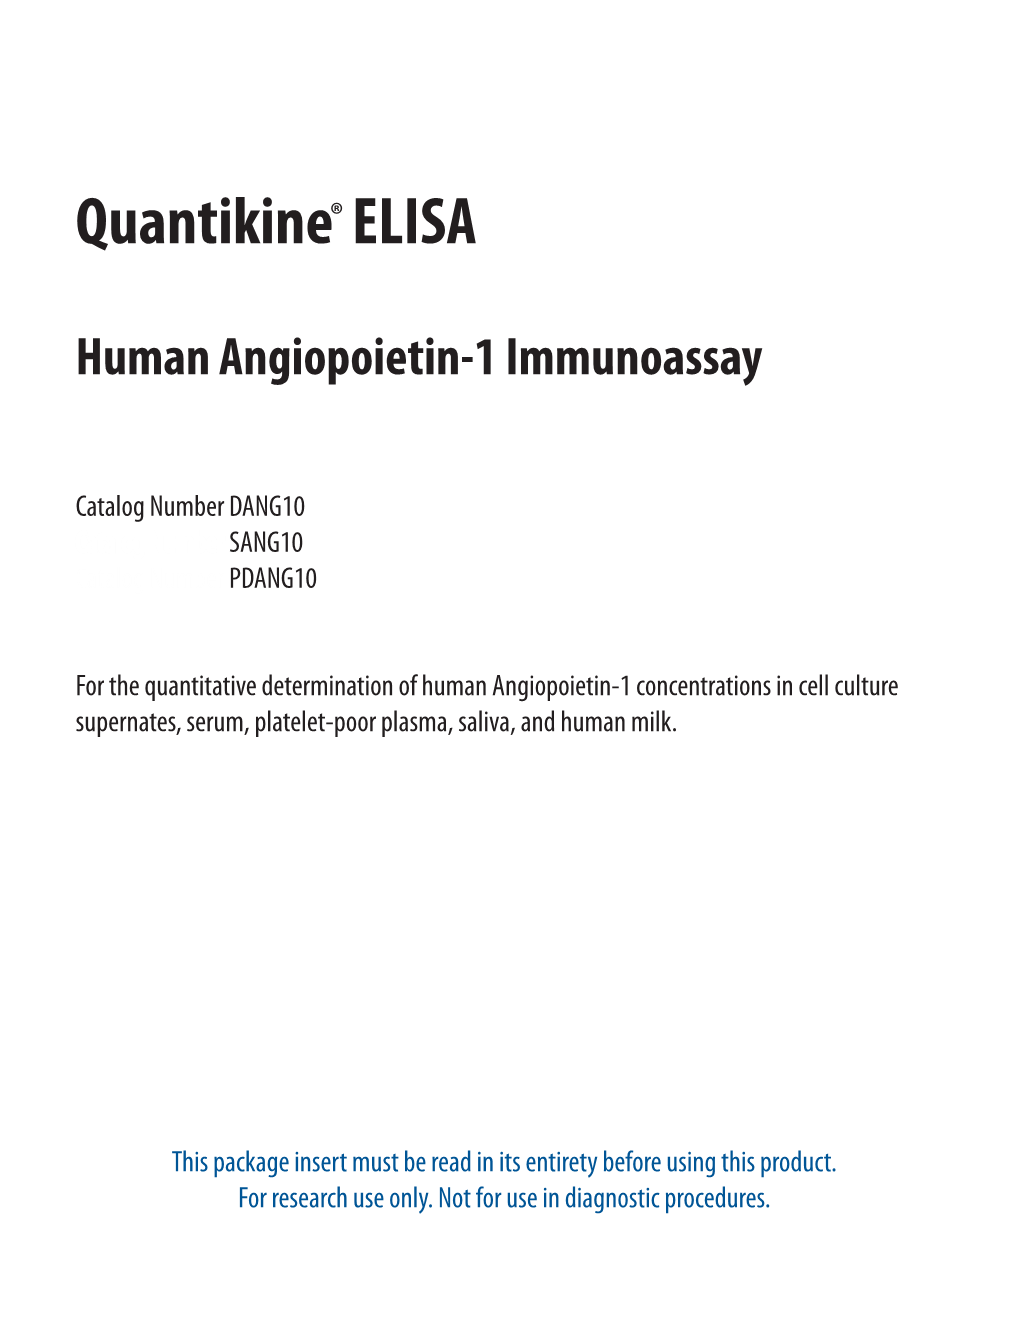 Human Angiopoietin-1 Quantikine